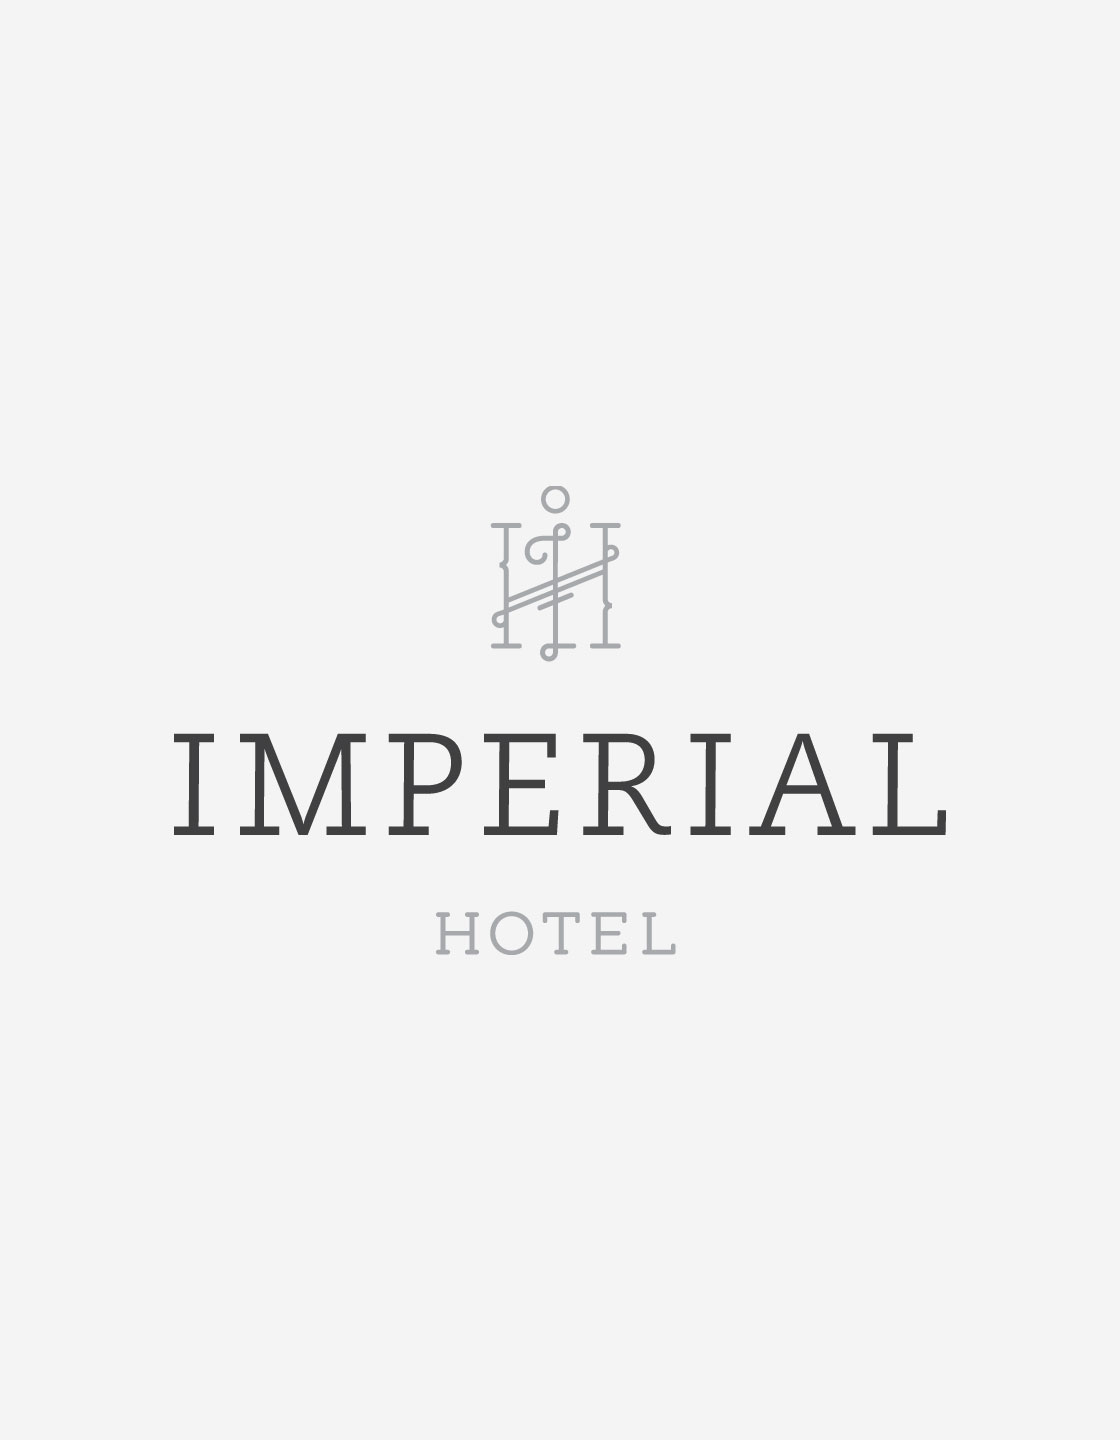 Imperial Hotel logo